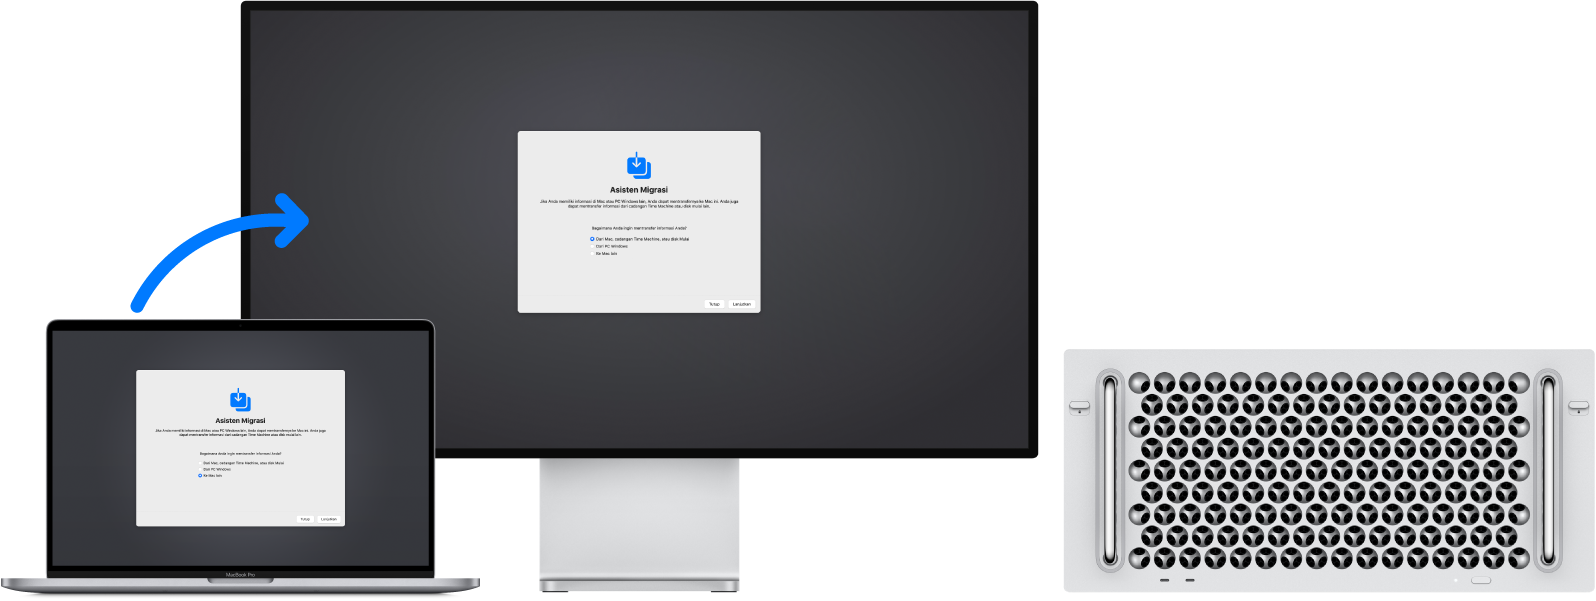 MacBook Pro dan Mac Pro menampilkan layar Asisten Migrasi. Panah dari MacBook Pro ke Mac Pro menandakan transfer data dari satu ke yang lain.